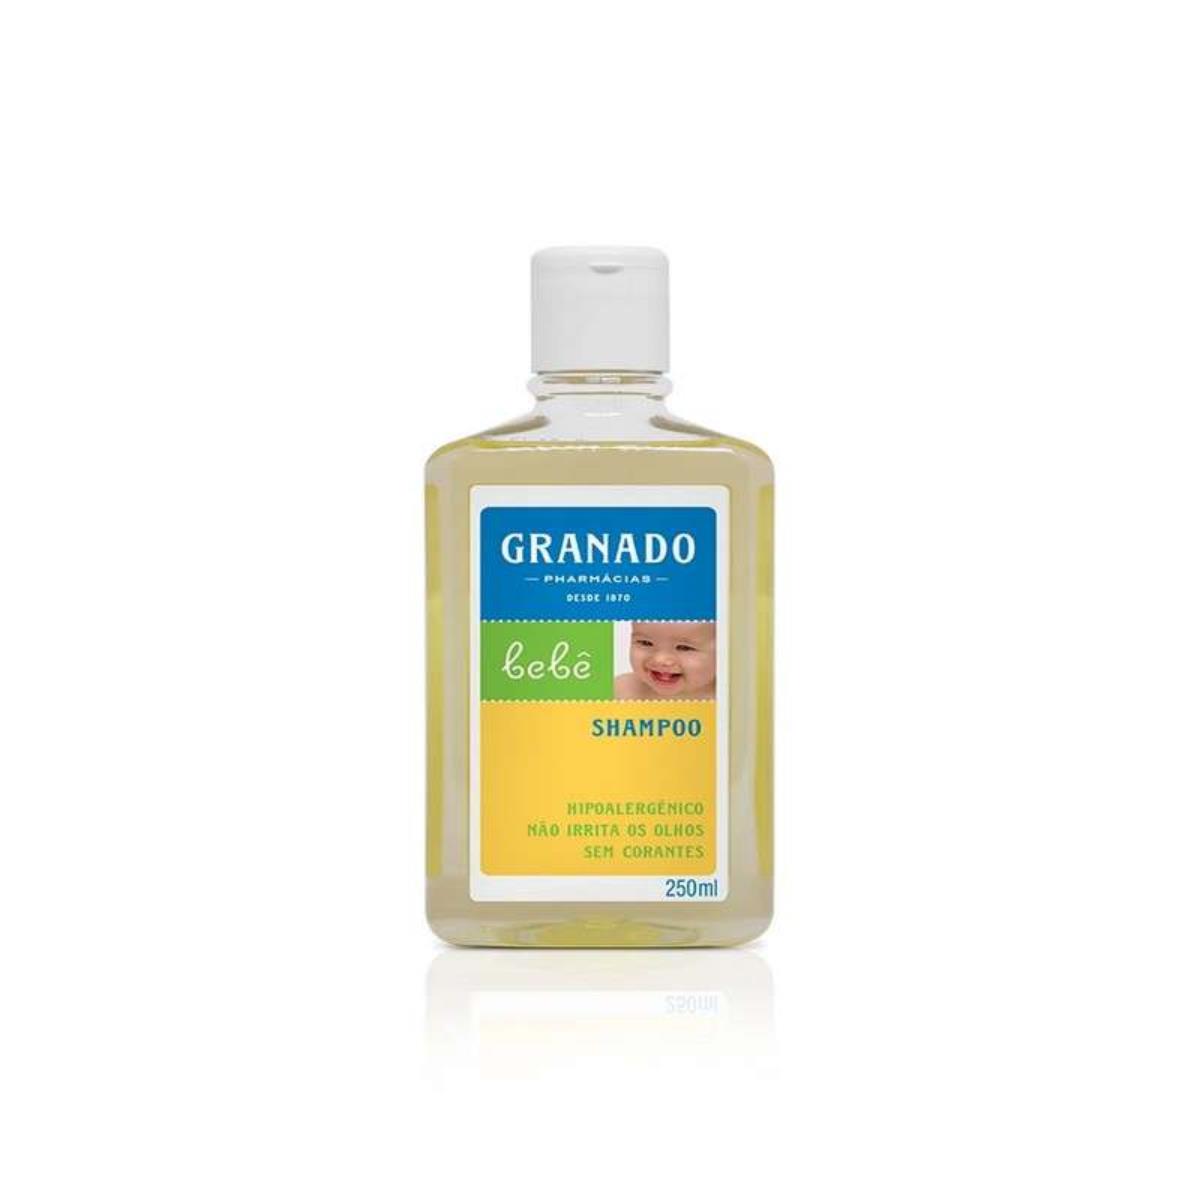 granado-shampoo-tradicional-250-ml-